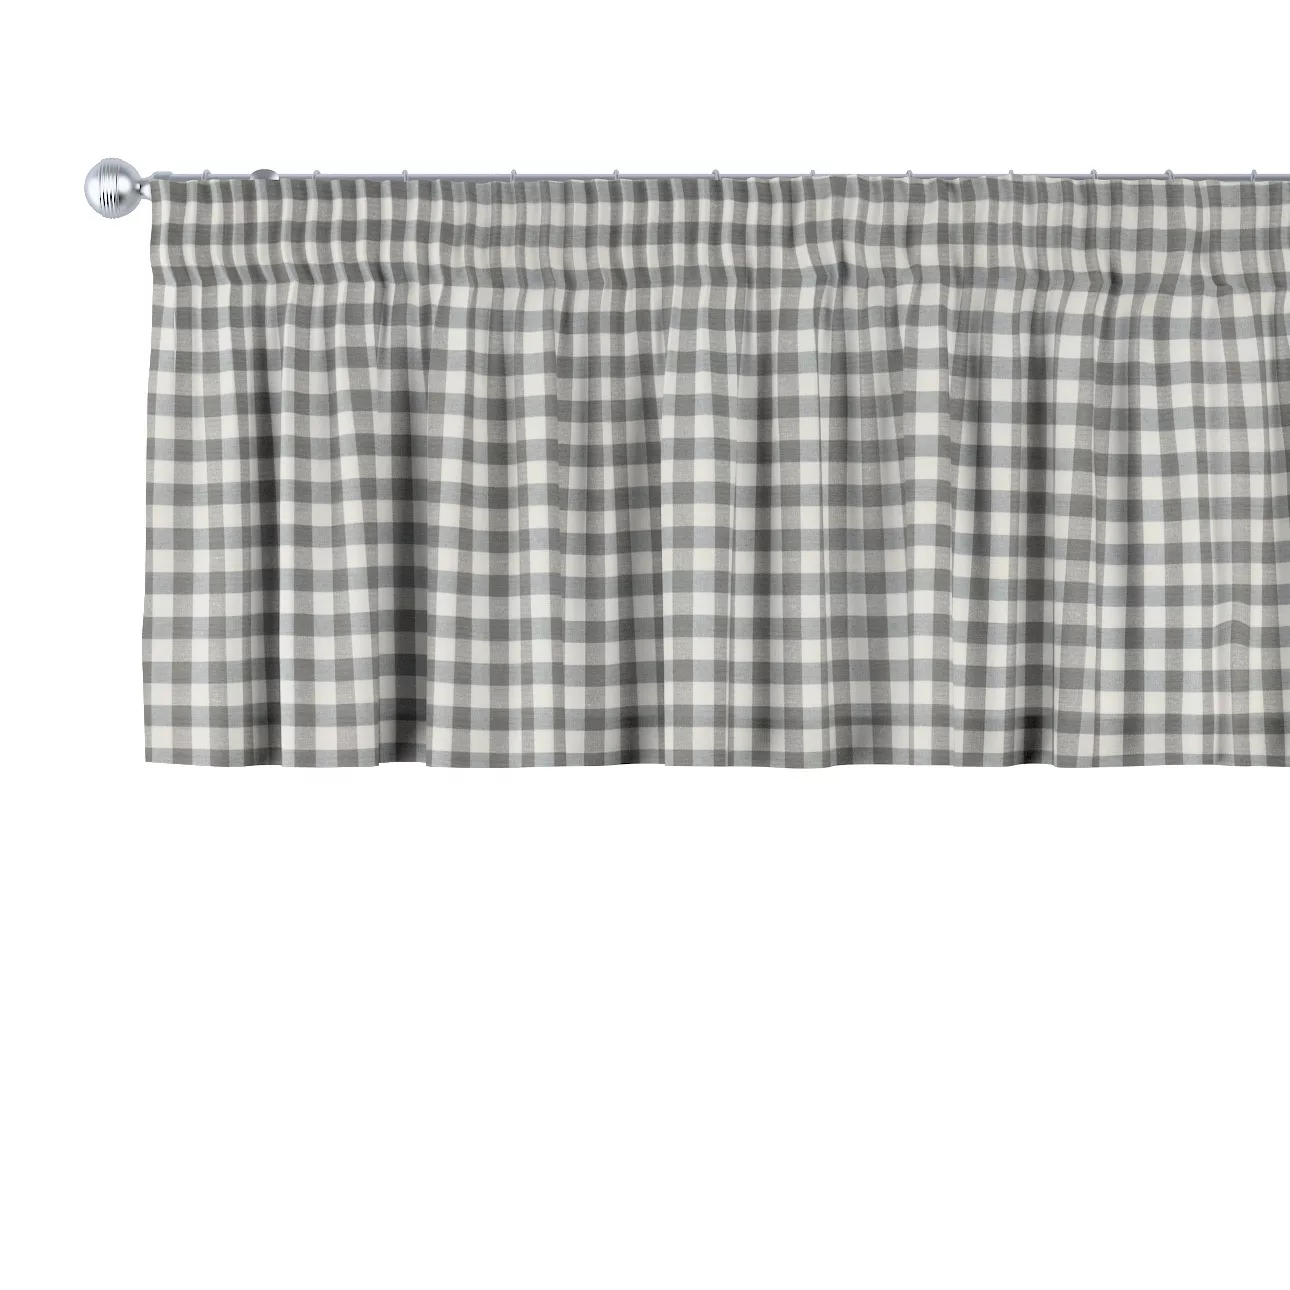 Kurzgardine mit Kräuselband, grau-ecru , 130 x 40 cm, Quadro (136-11) günstig online kaufen